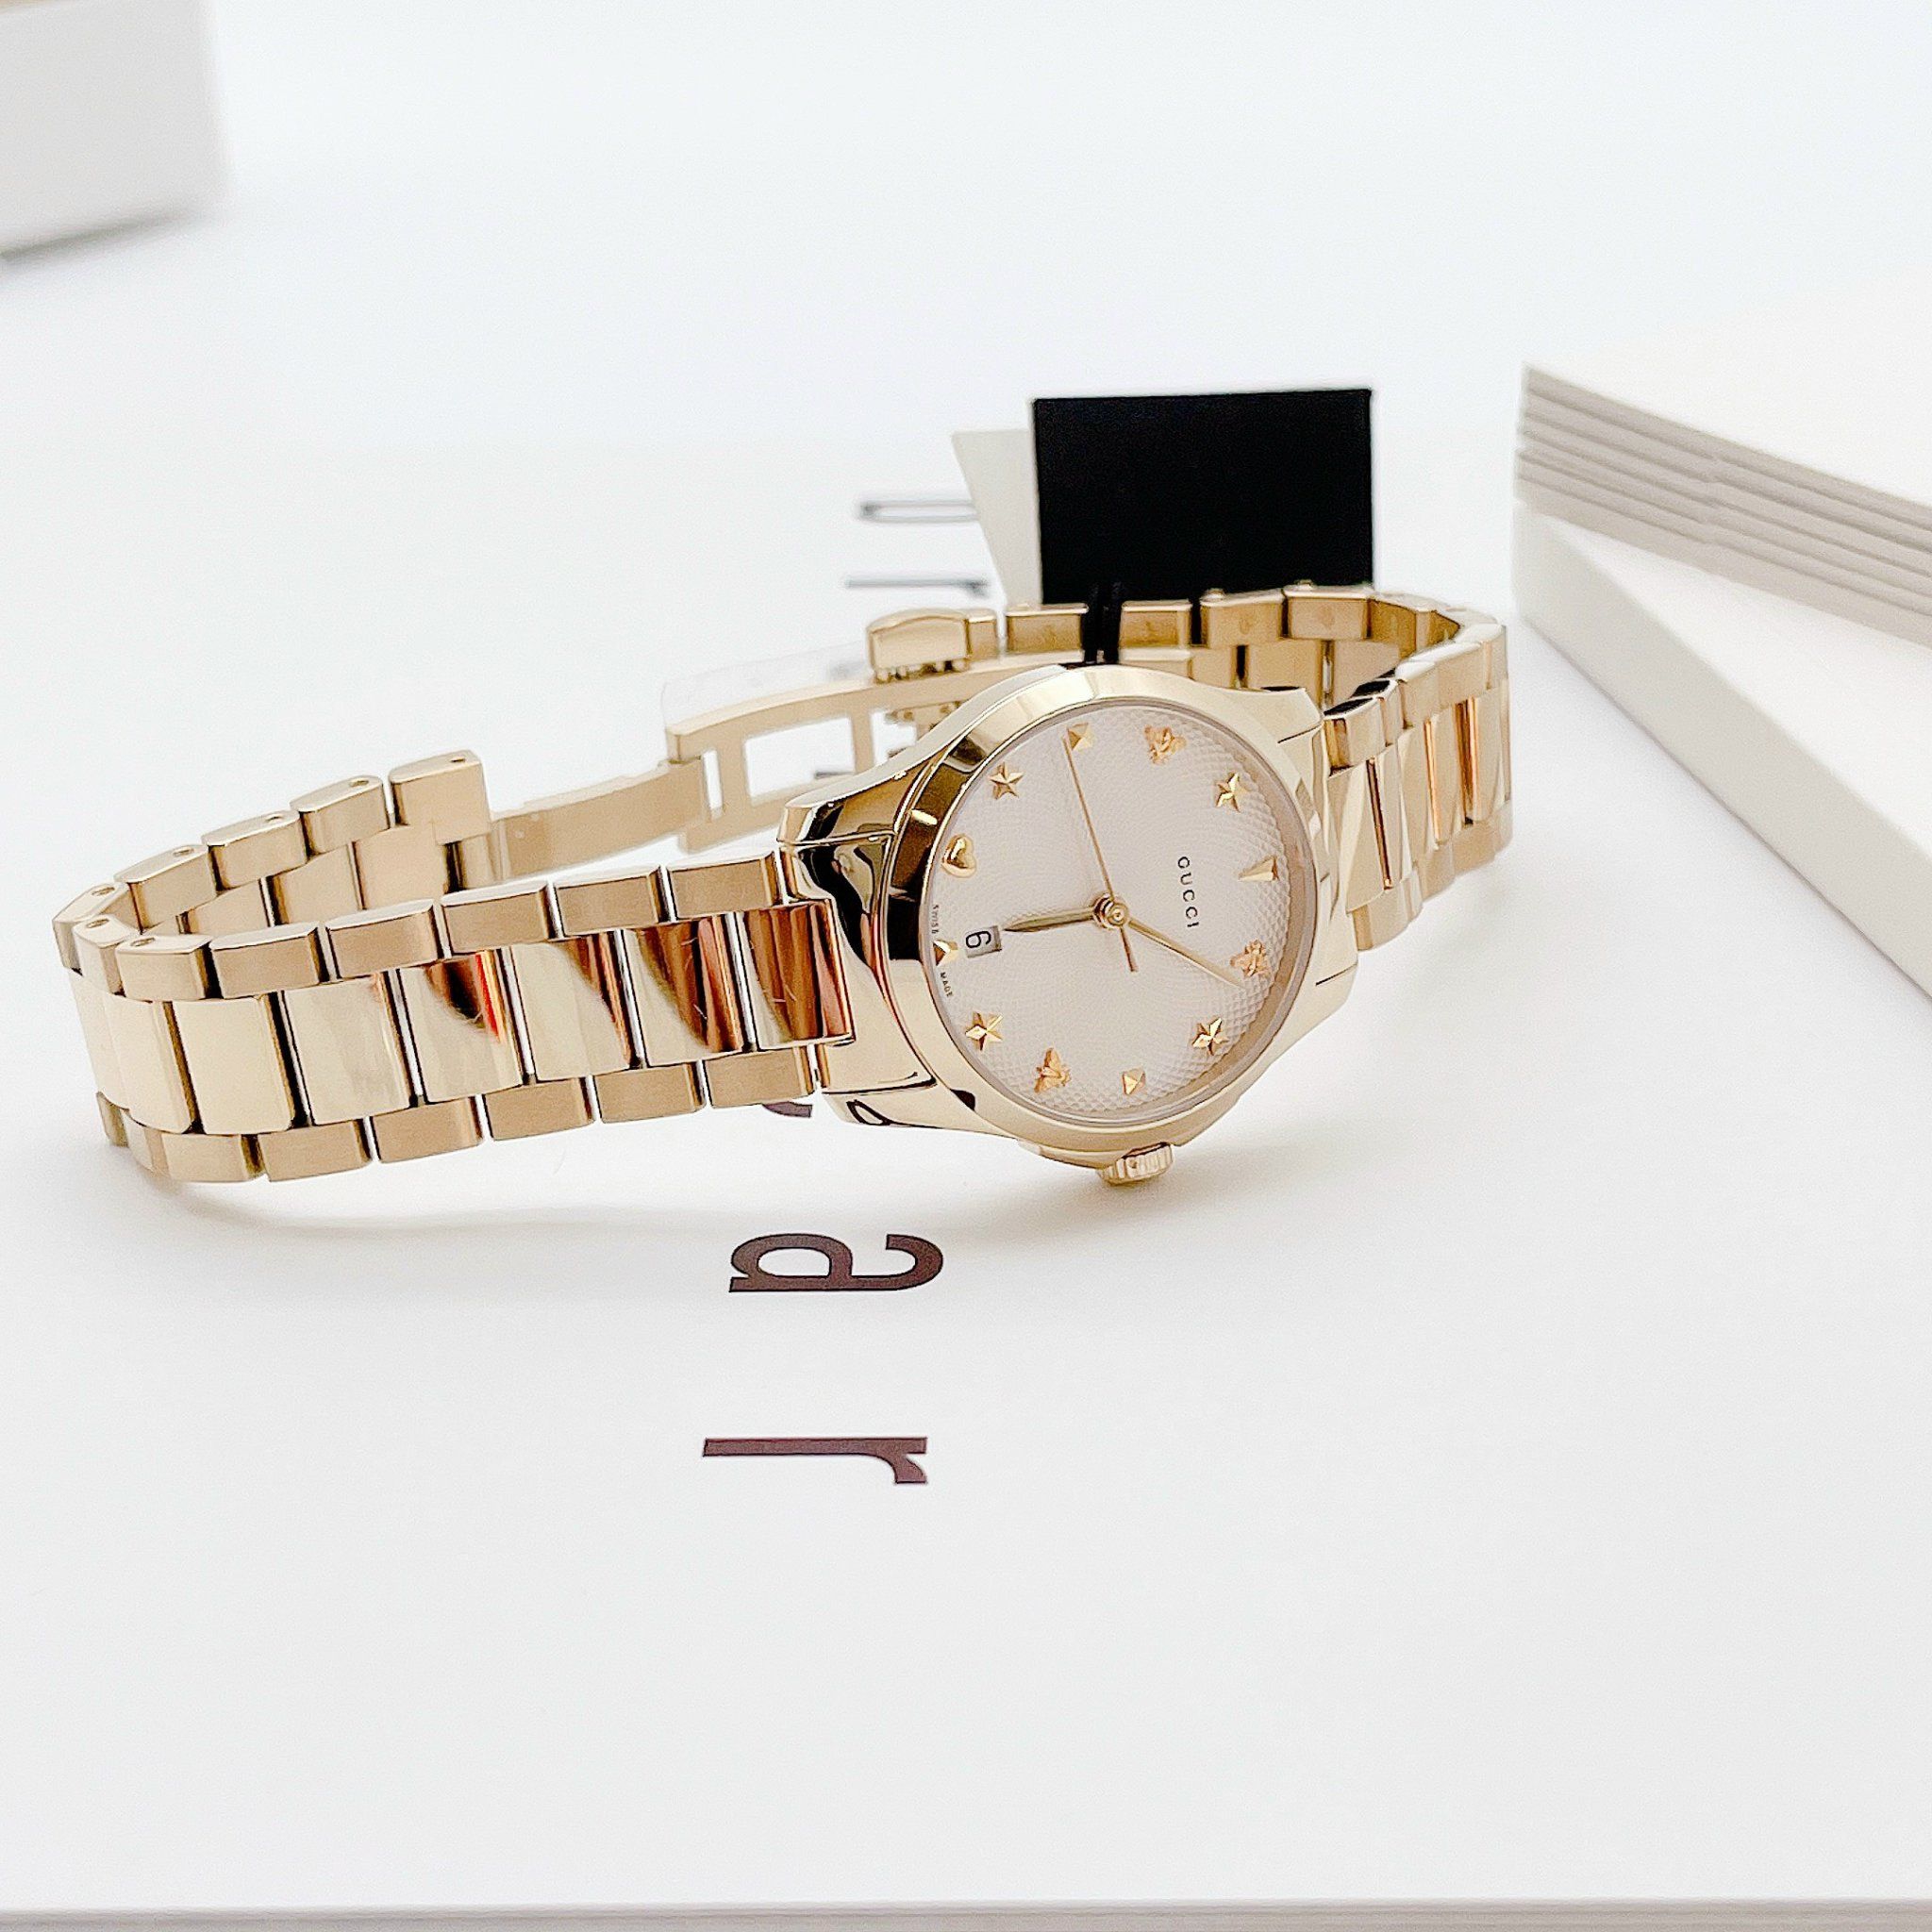  Đồng hồ Nữ Gucci G Timeless YA126576A size 28mm 